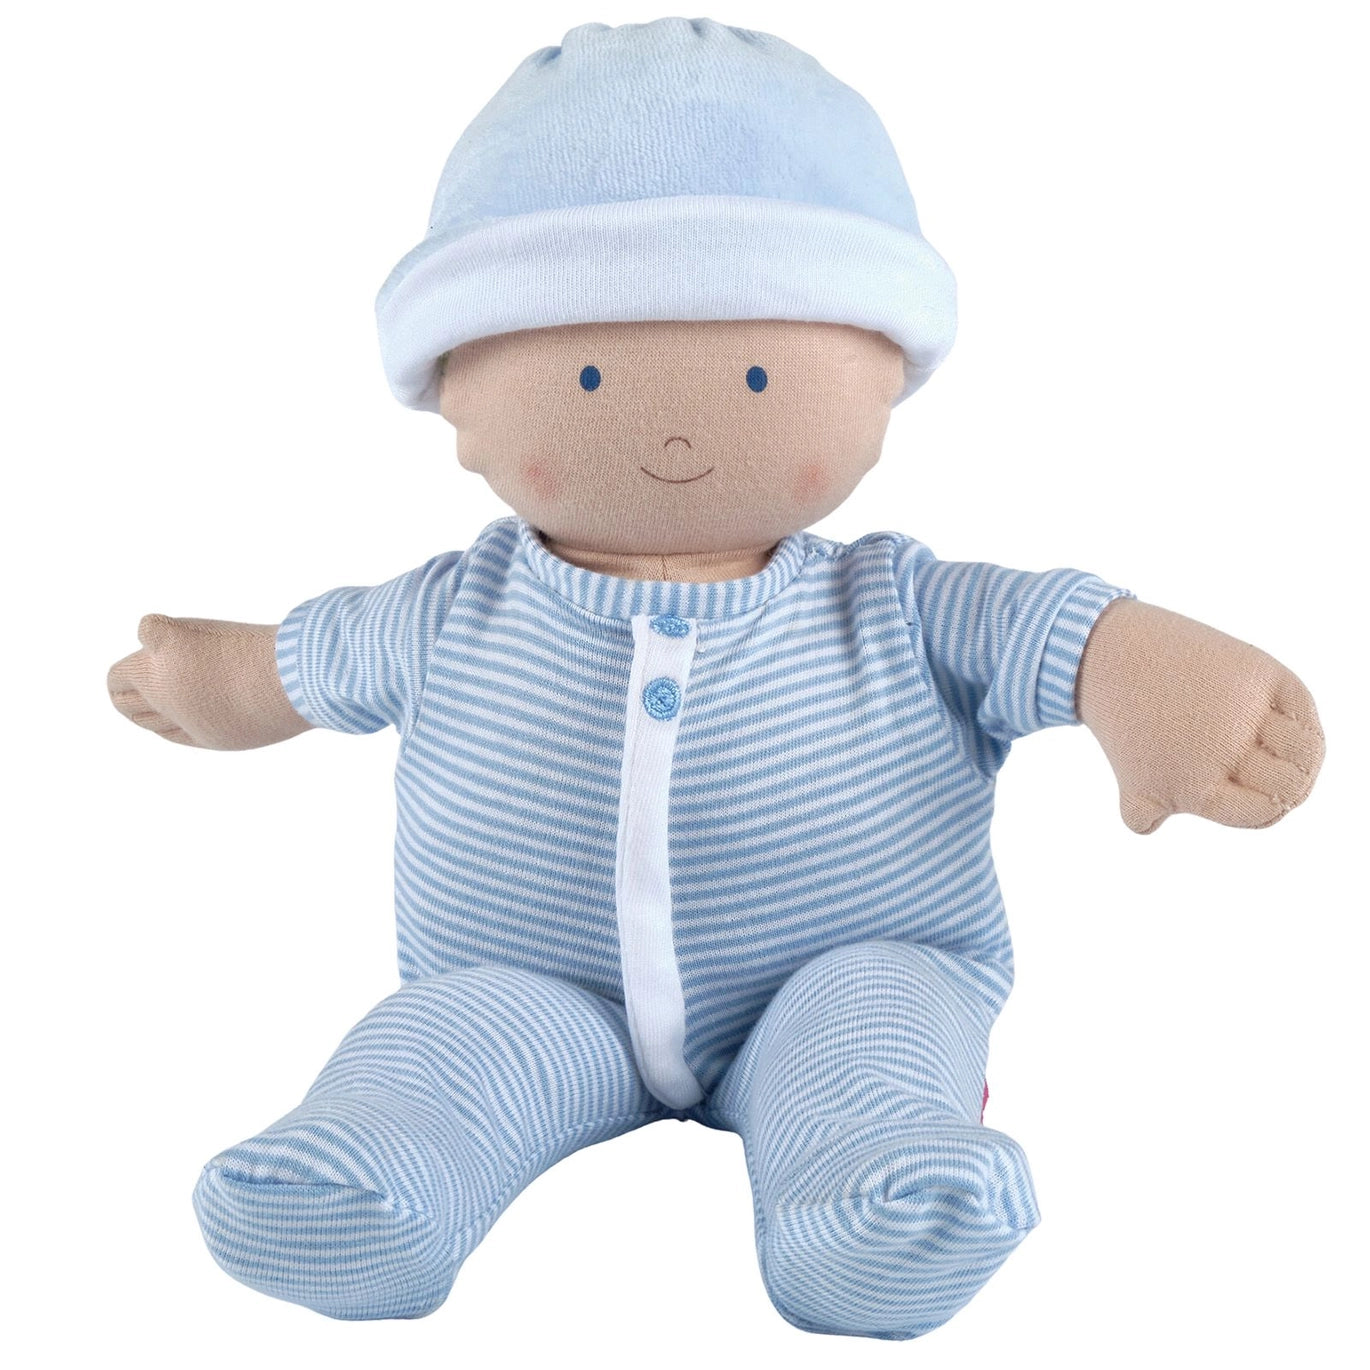 Tikiri Toys cherub baby doll